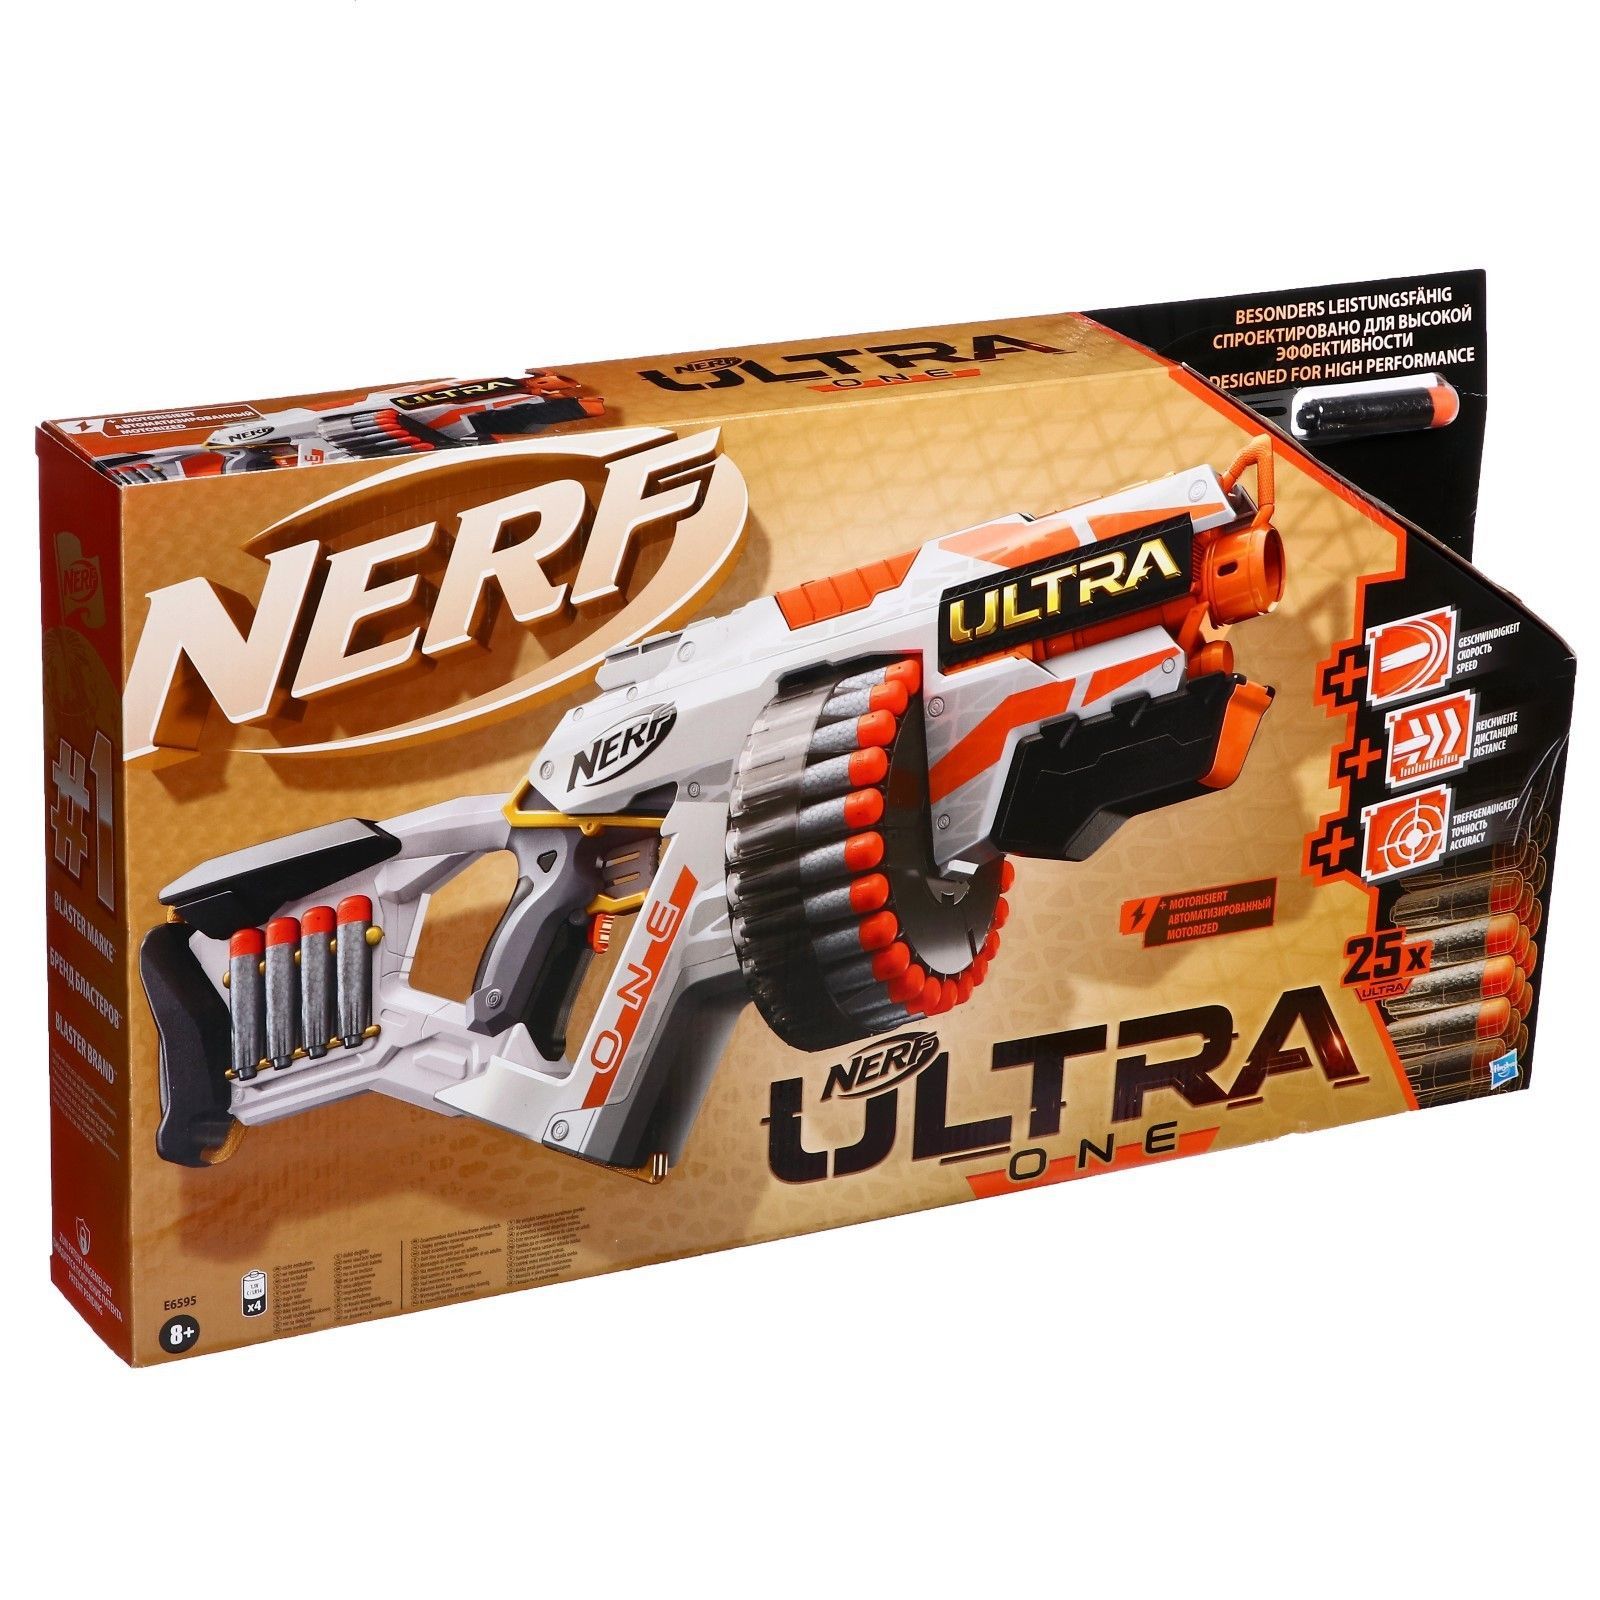 Nerf Ultra one e6595. Nerf: Ultra. One. Игровой набор нёрф ультра one. Nerf Ultra one купить.